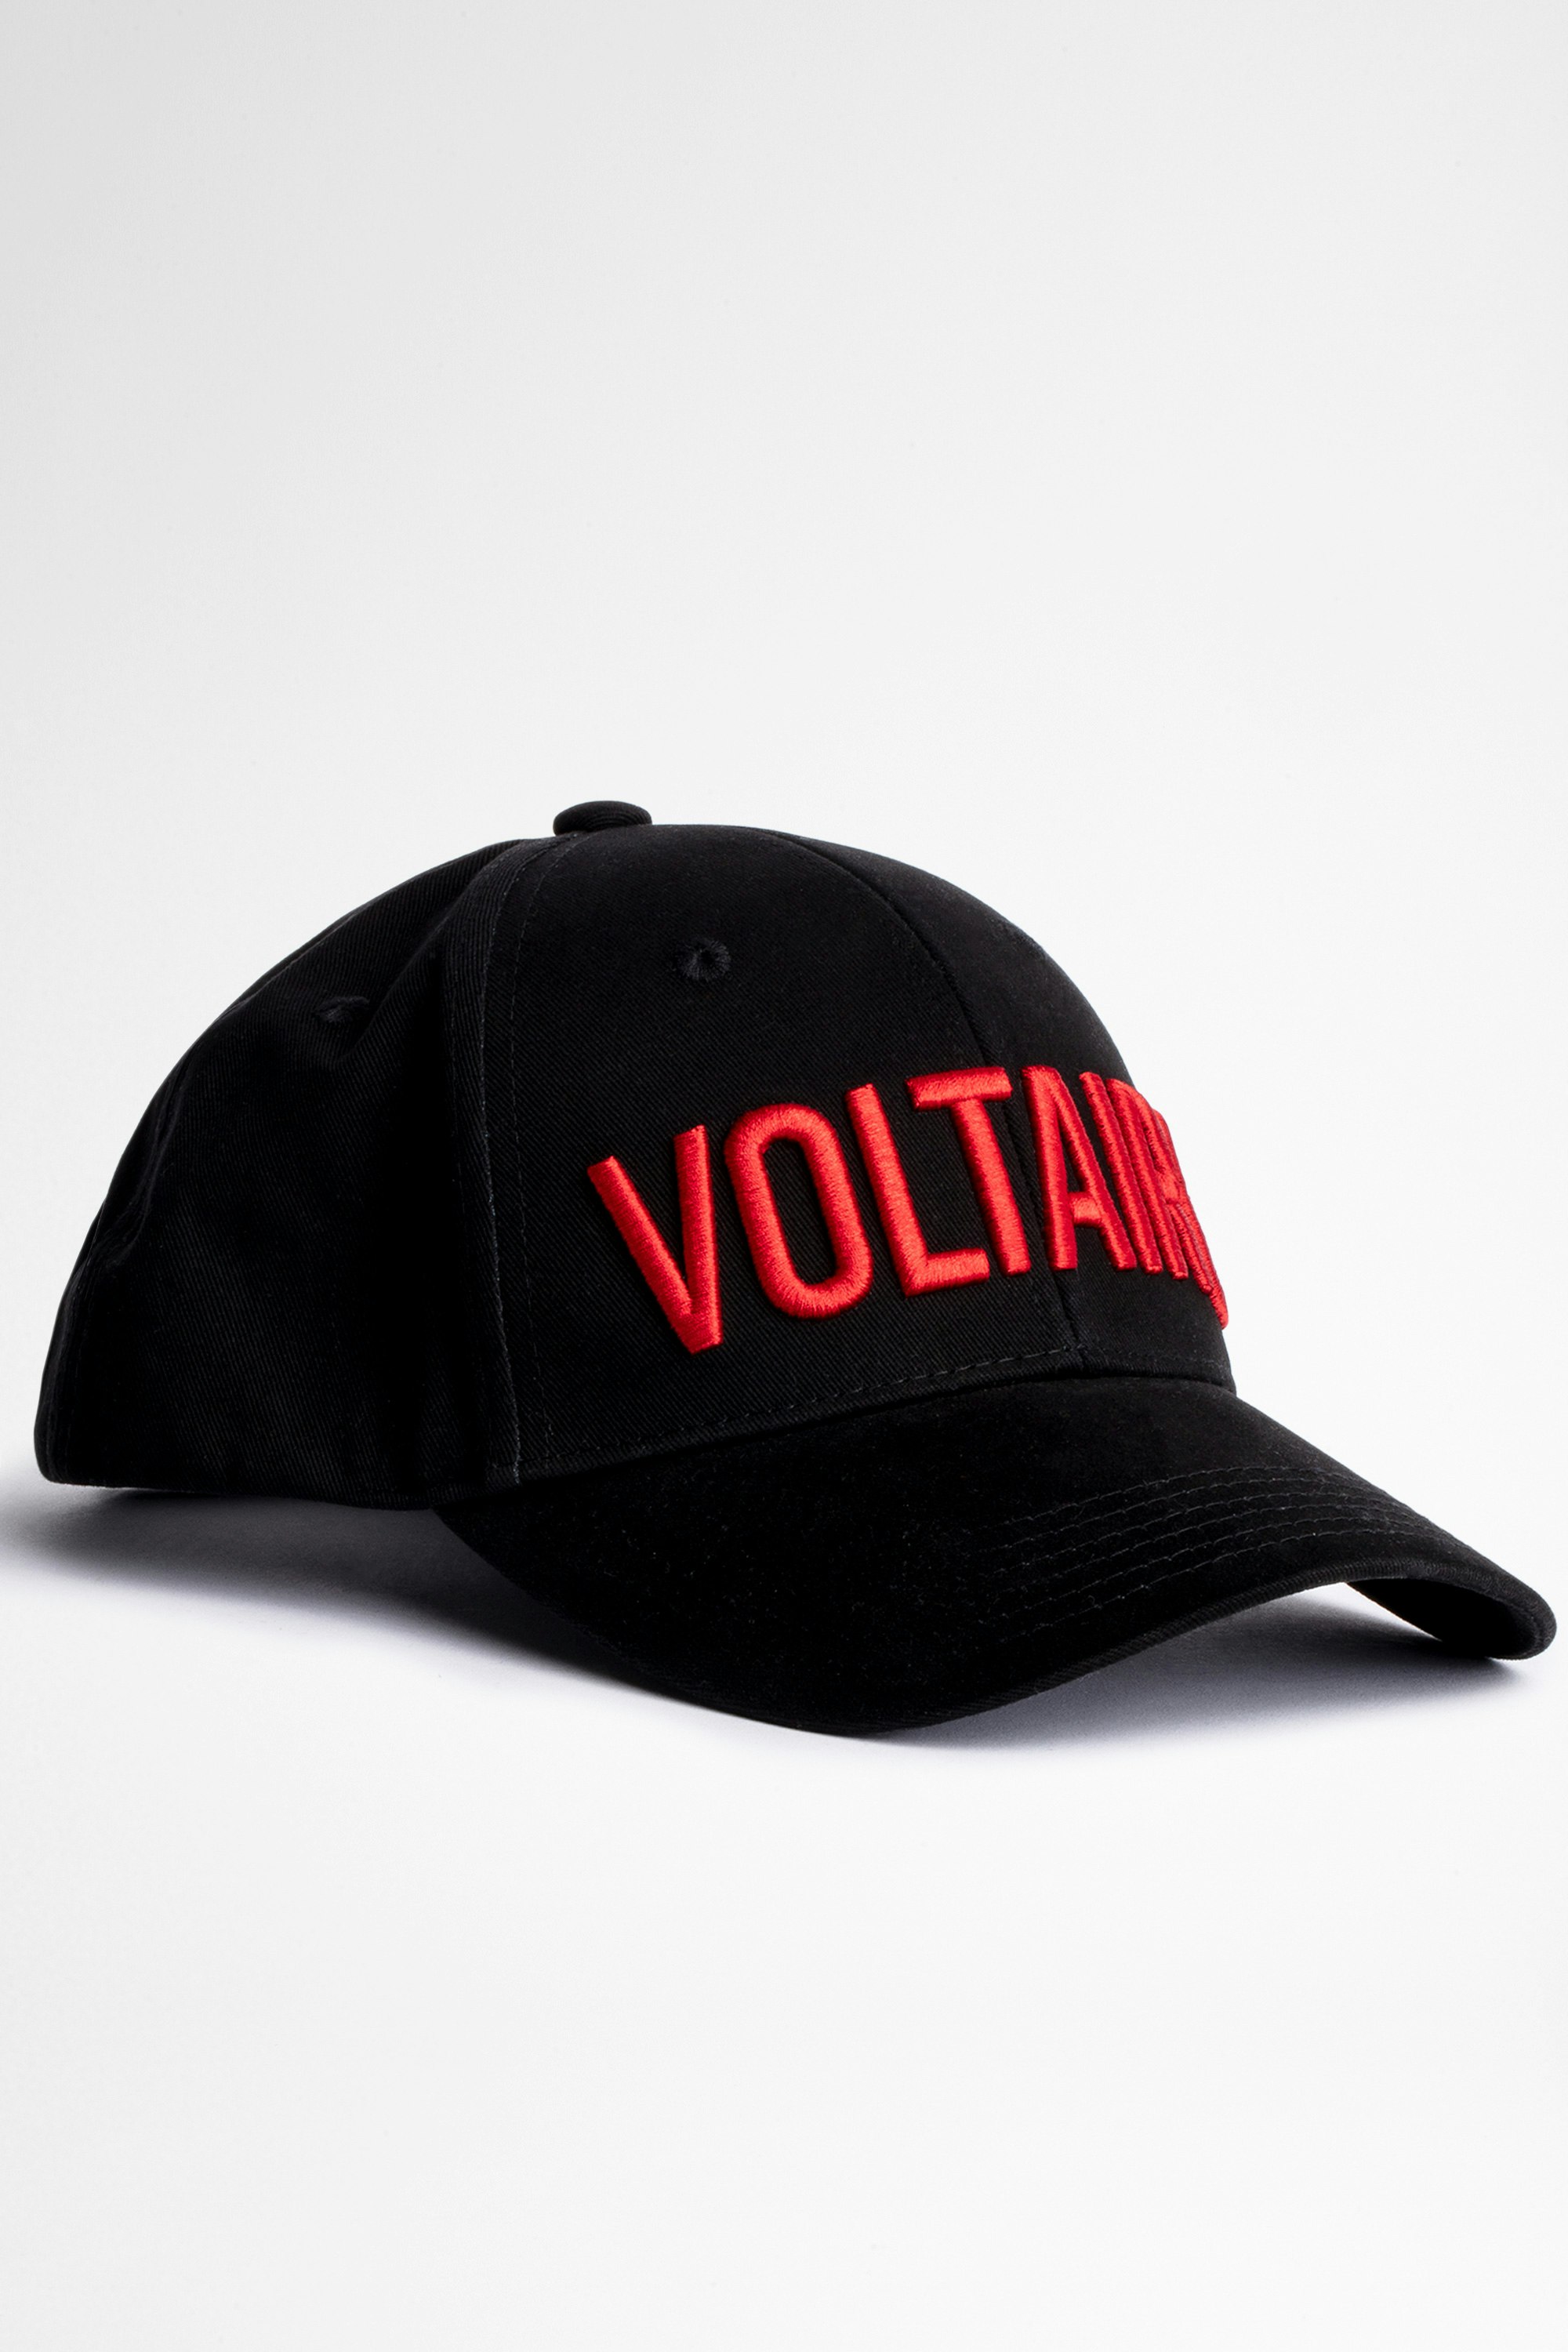 Klelia Maxi Voltaire 帽子 Zadig&Voltaire men's embroidered cotton cap in black